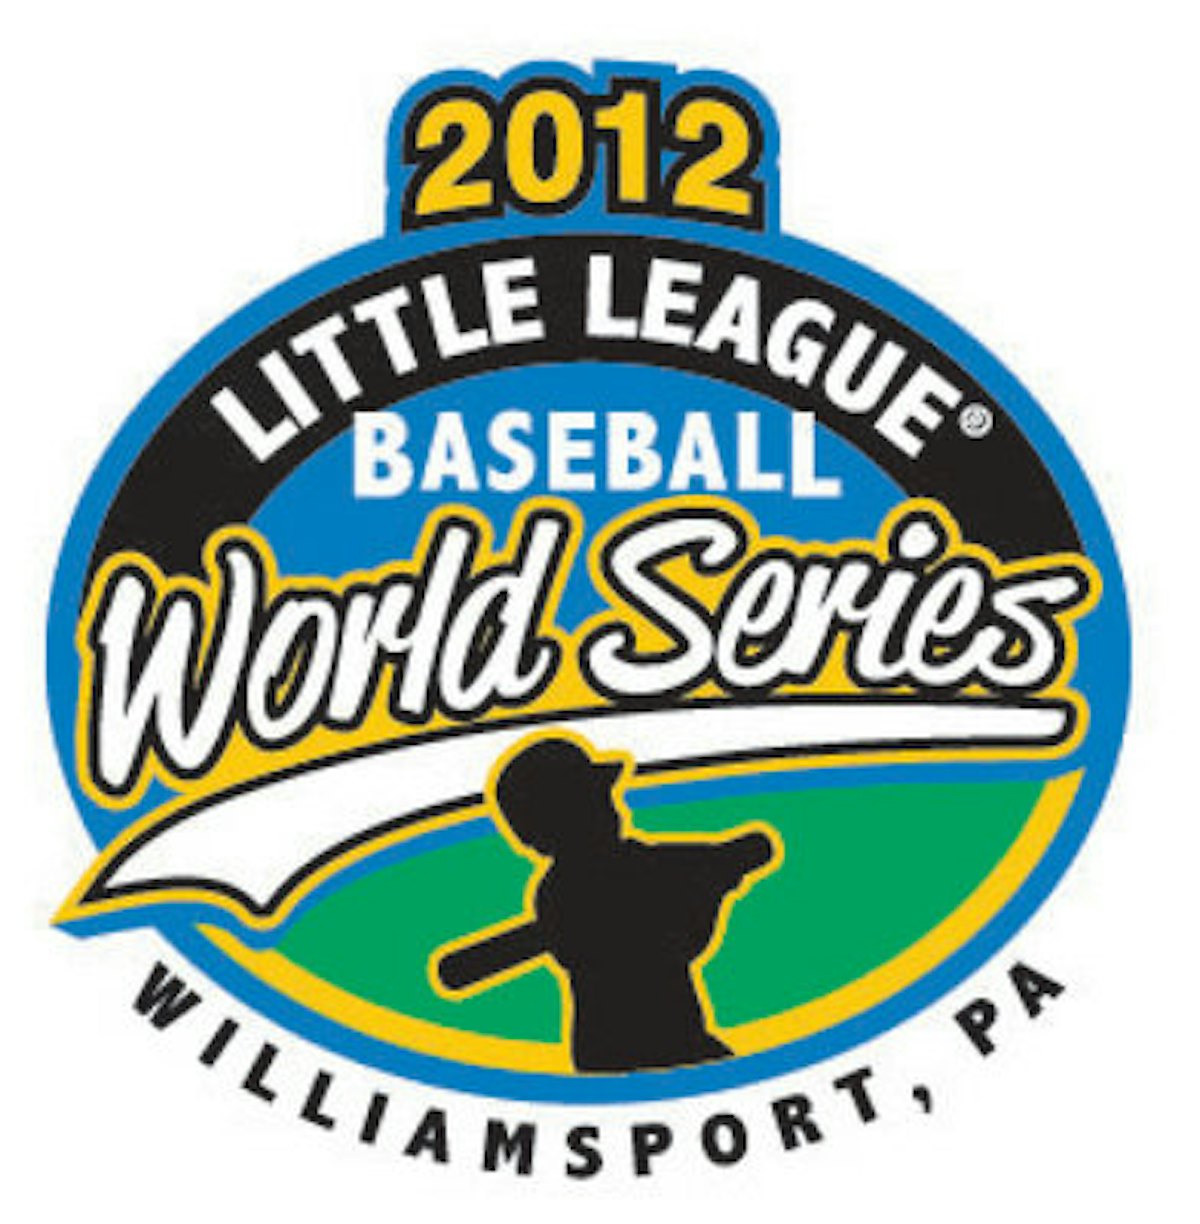 Why I Love the Little League Baseball World Series